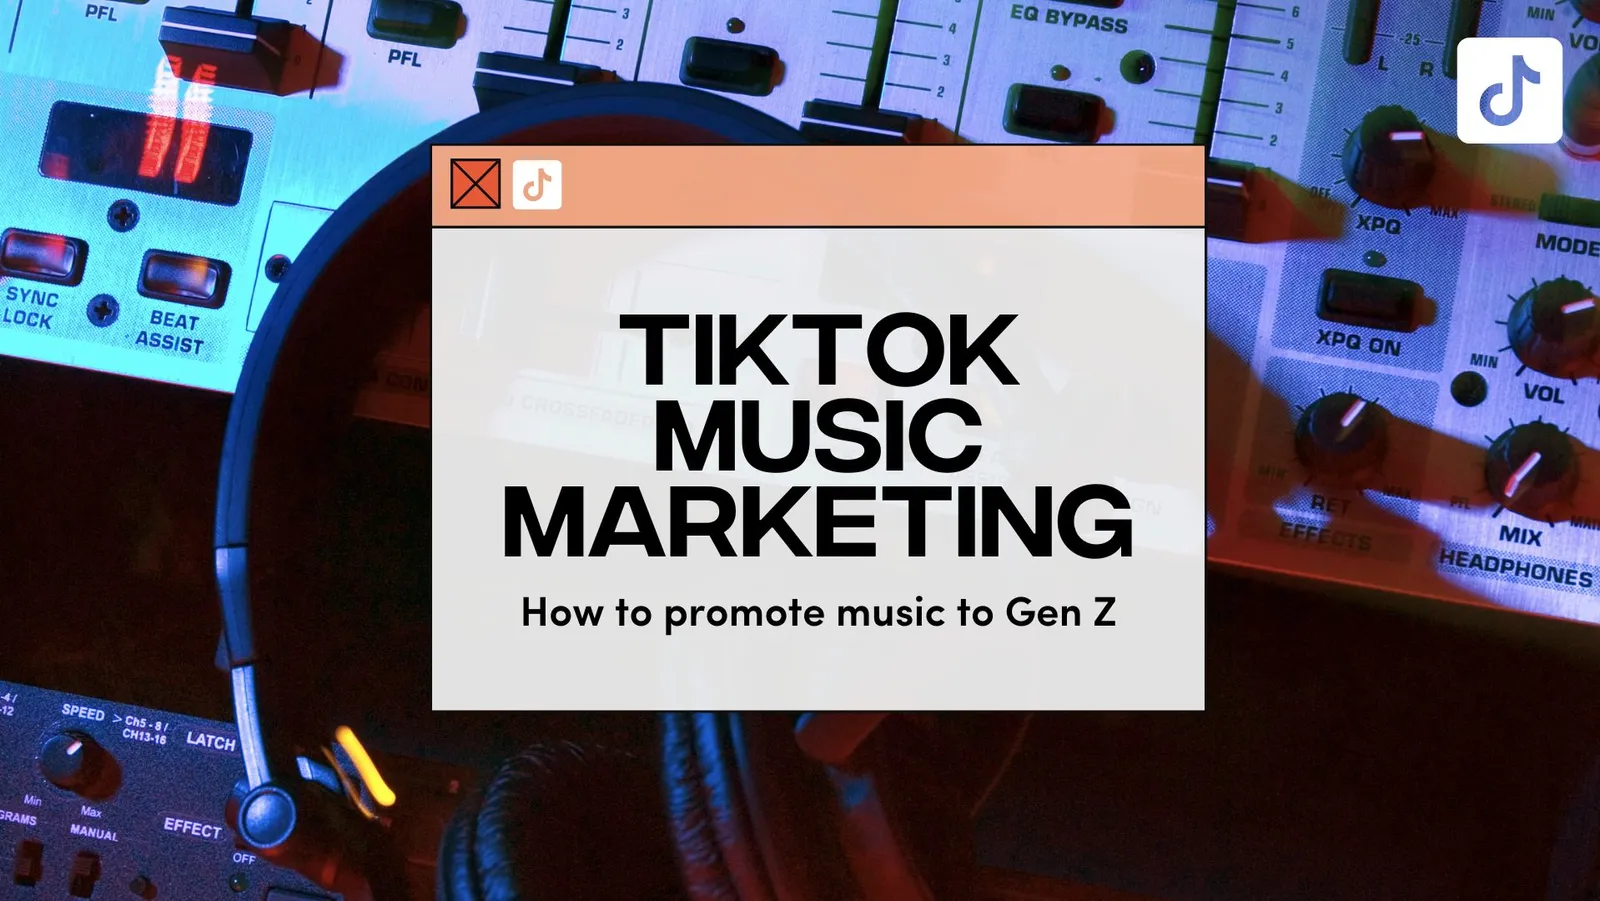 Musisi, Ini Cara Memperkenalkan Lagu ke Gen Z Lewat TikTok Marketing